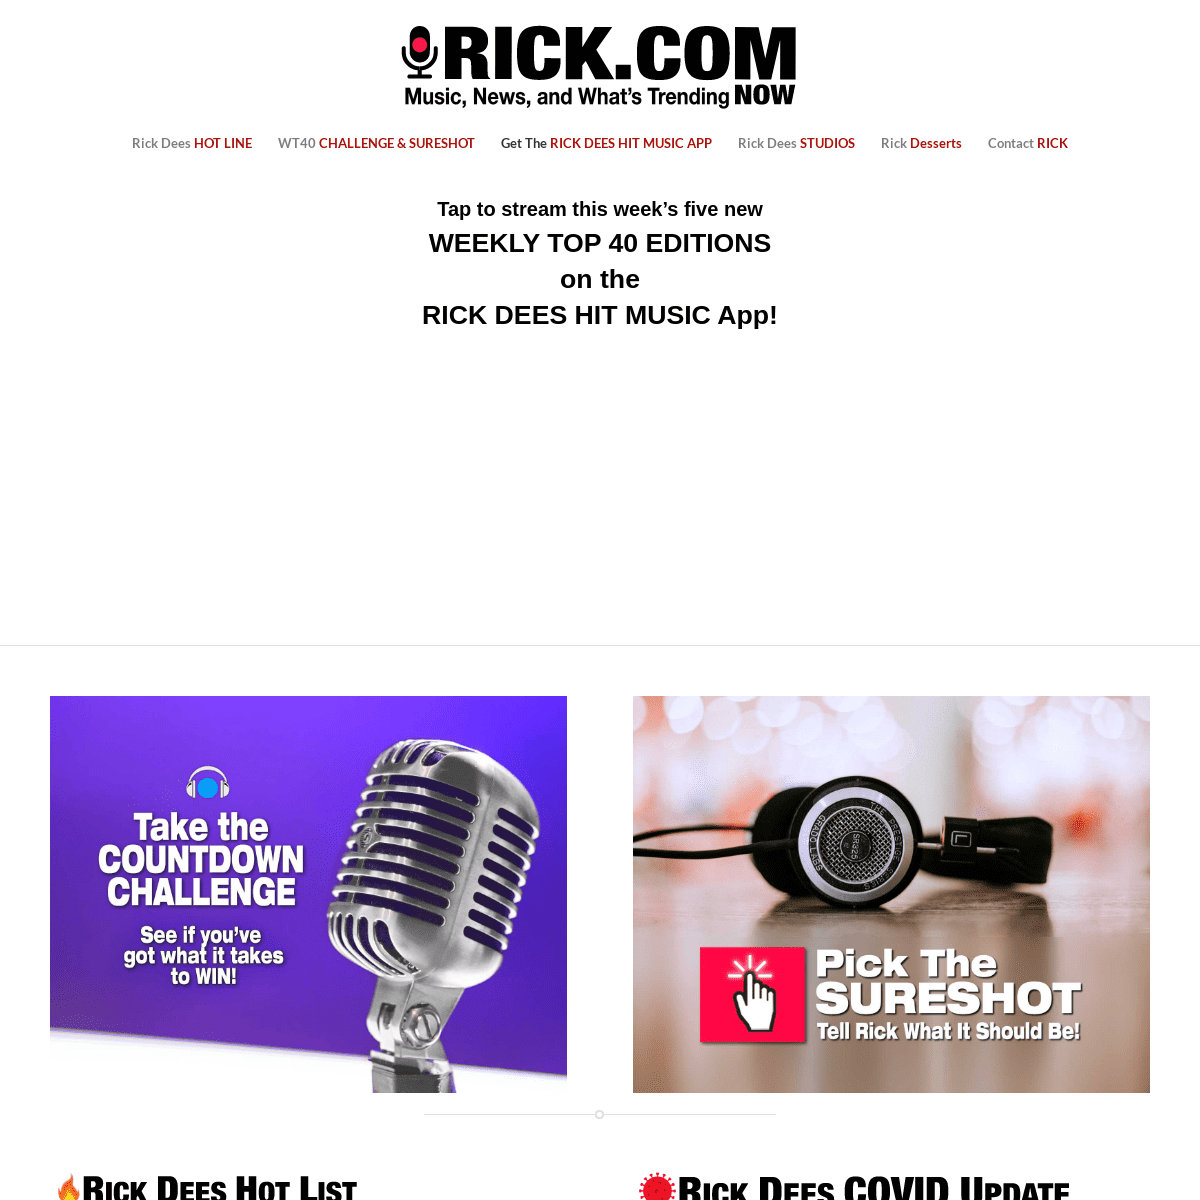 A complete backup of https://rick.com